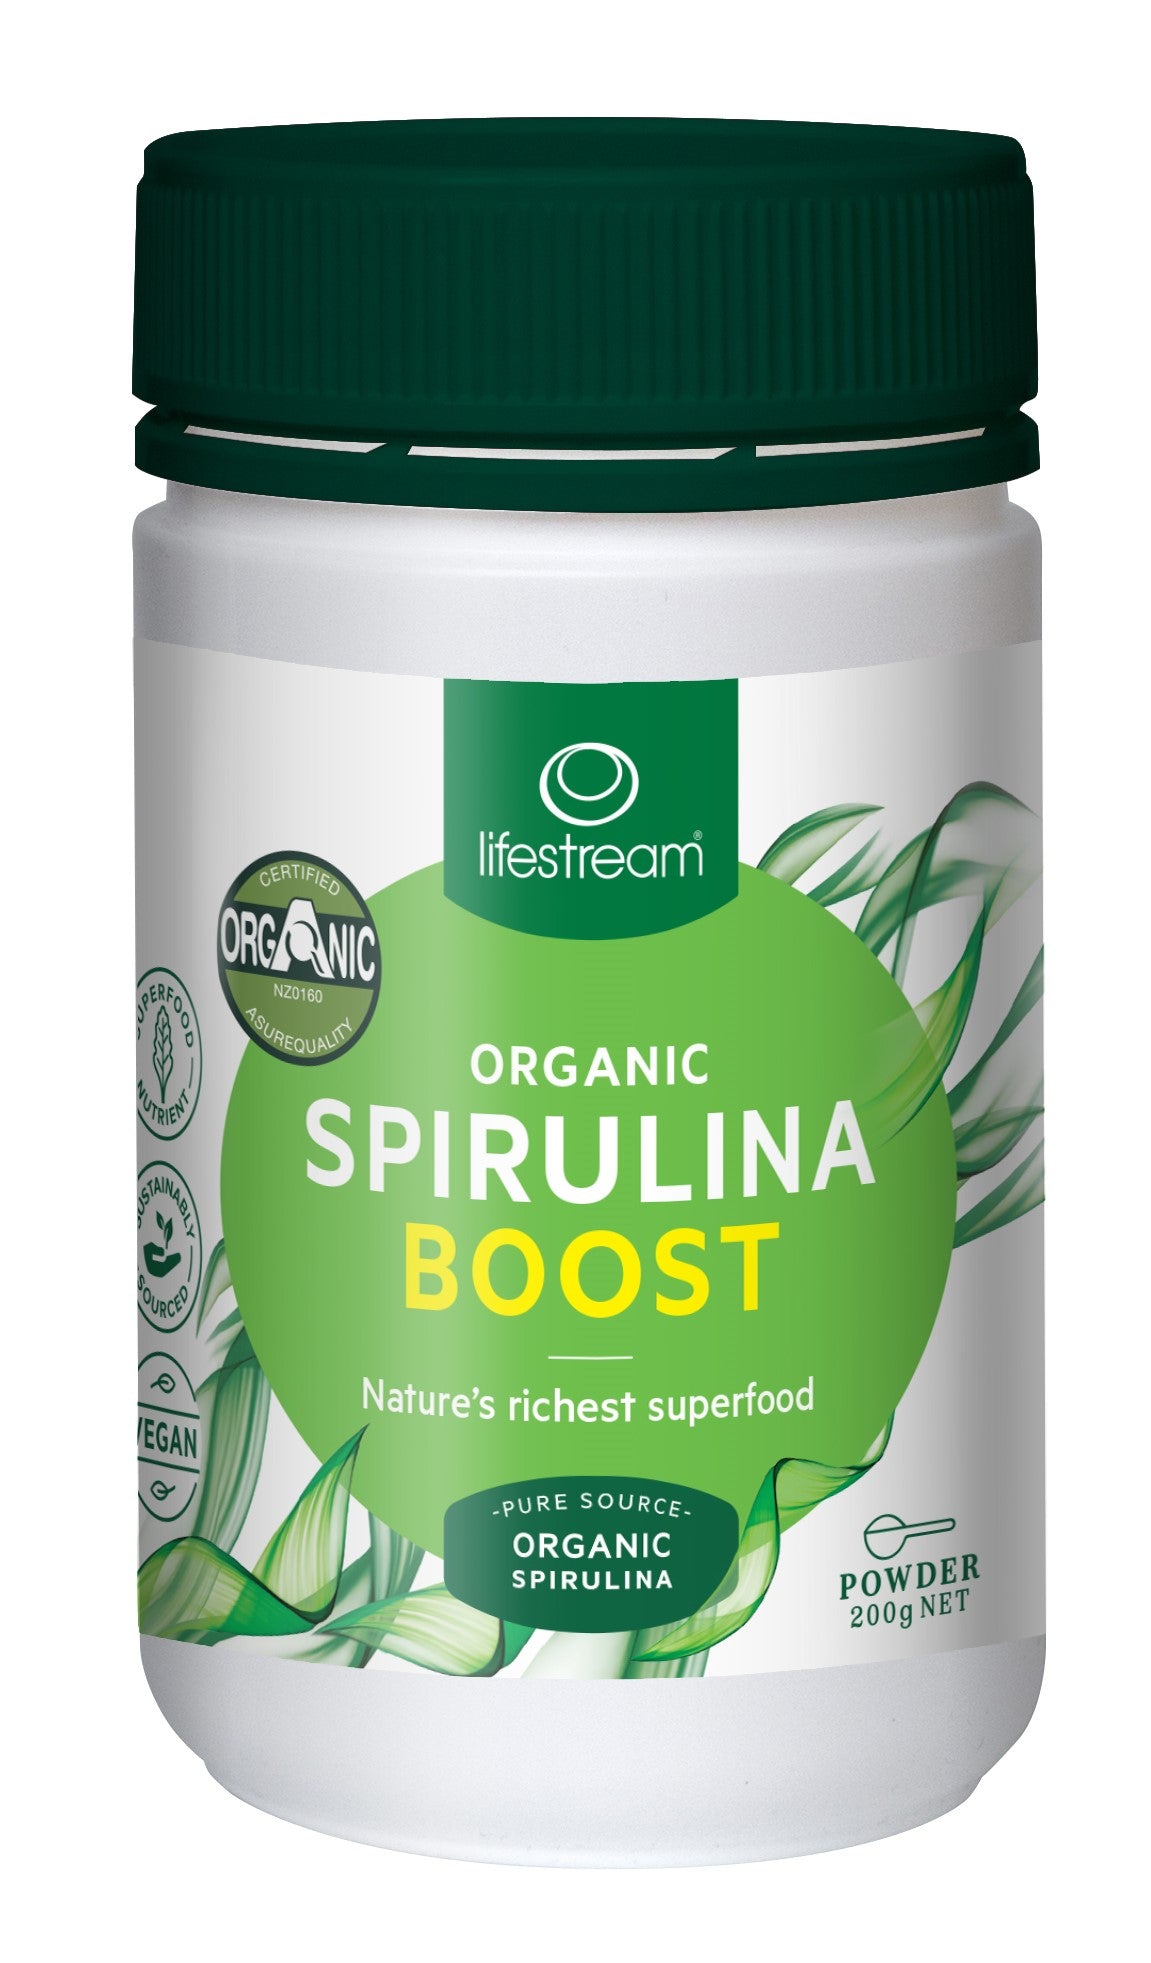 Lifestream Certified Organic Spirulina Boost Powder 200g